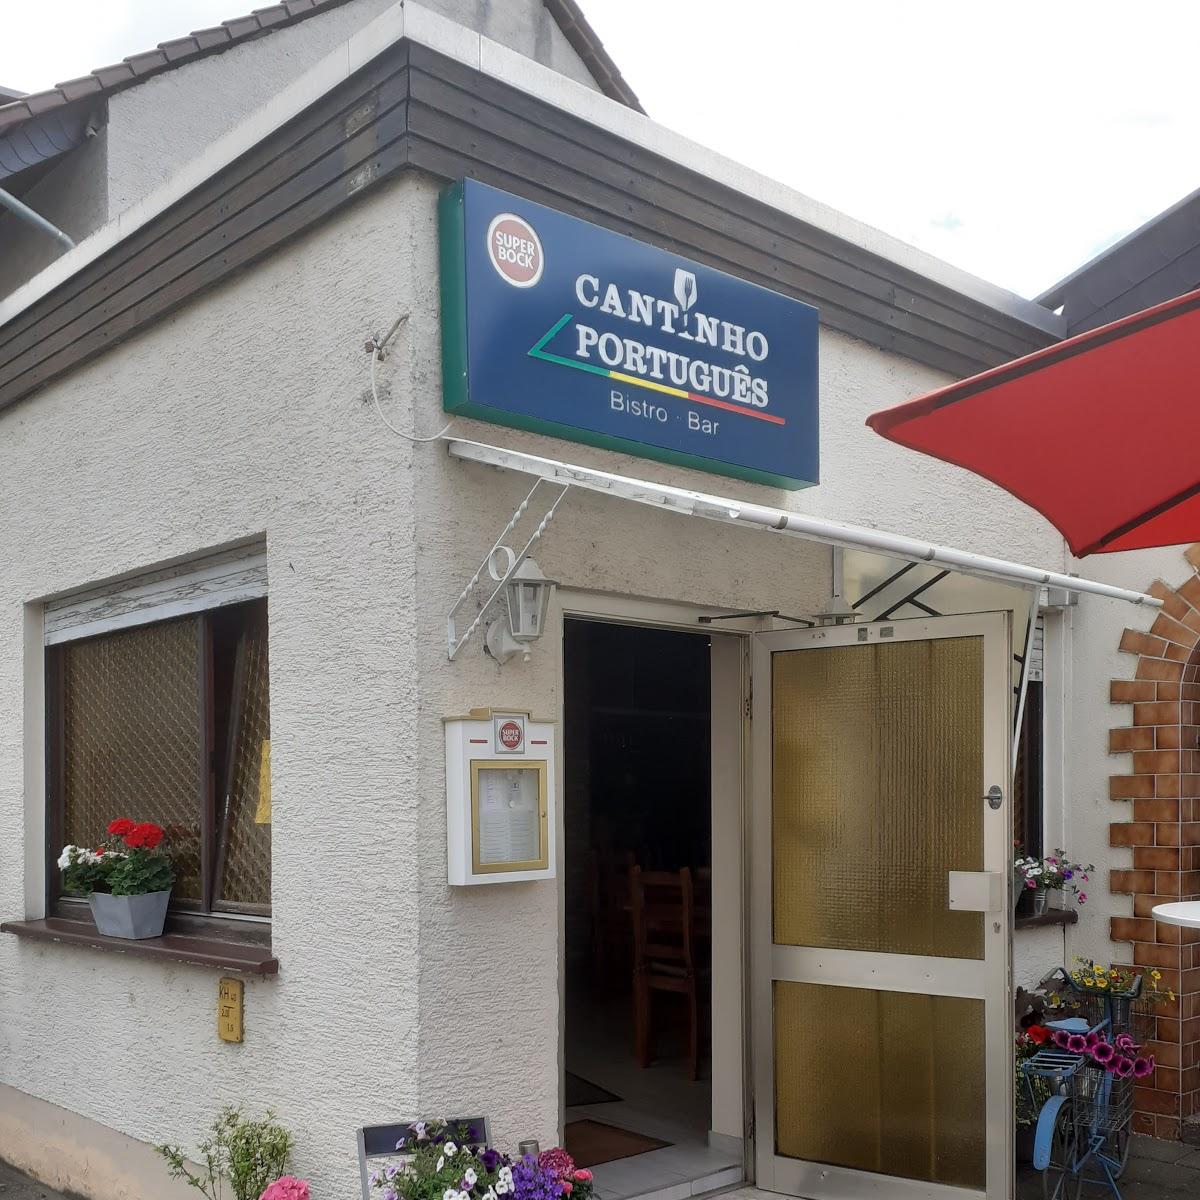 Restaurant "Cantinho Português" in Babenhausen